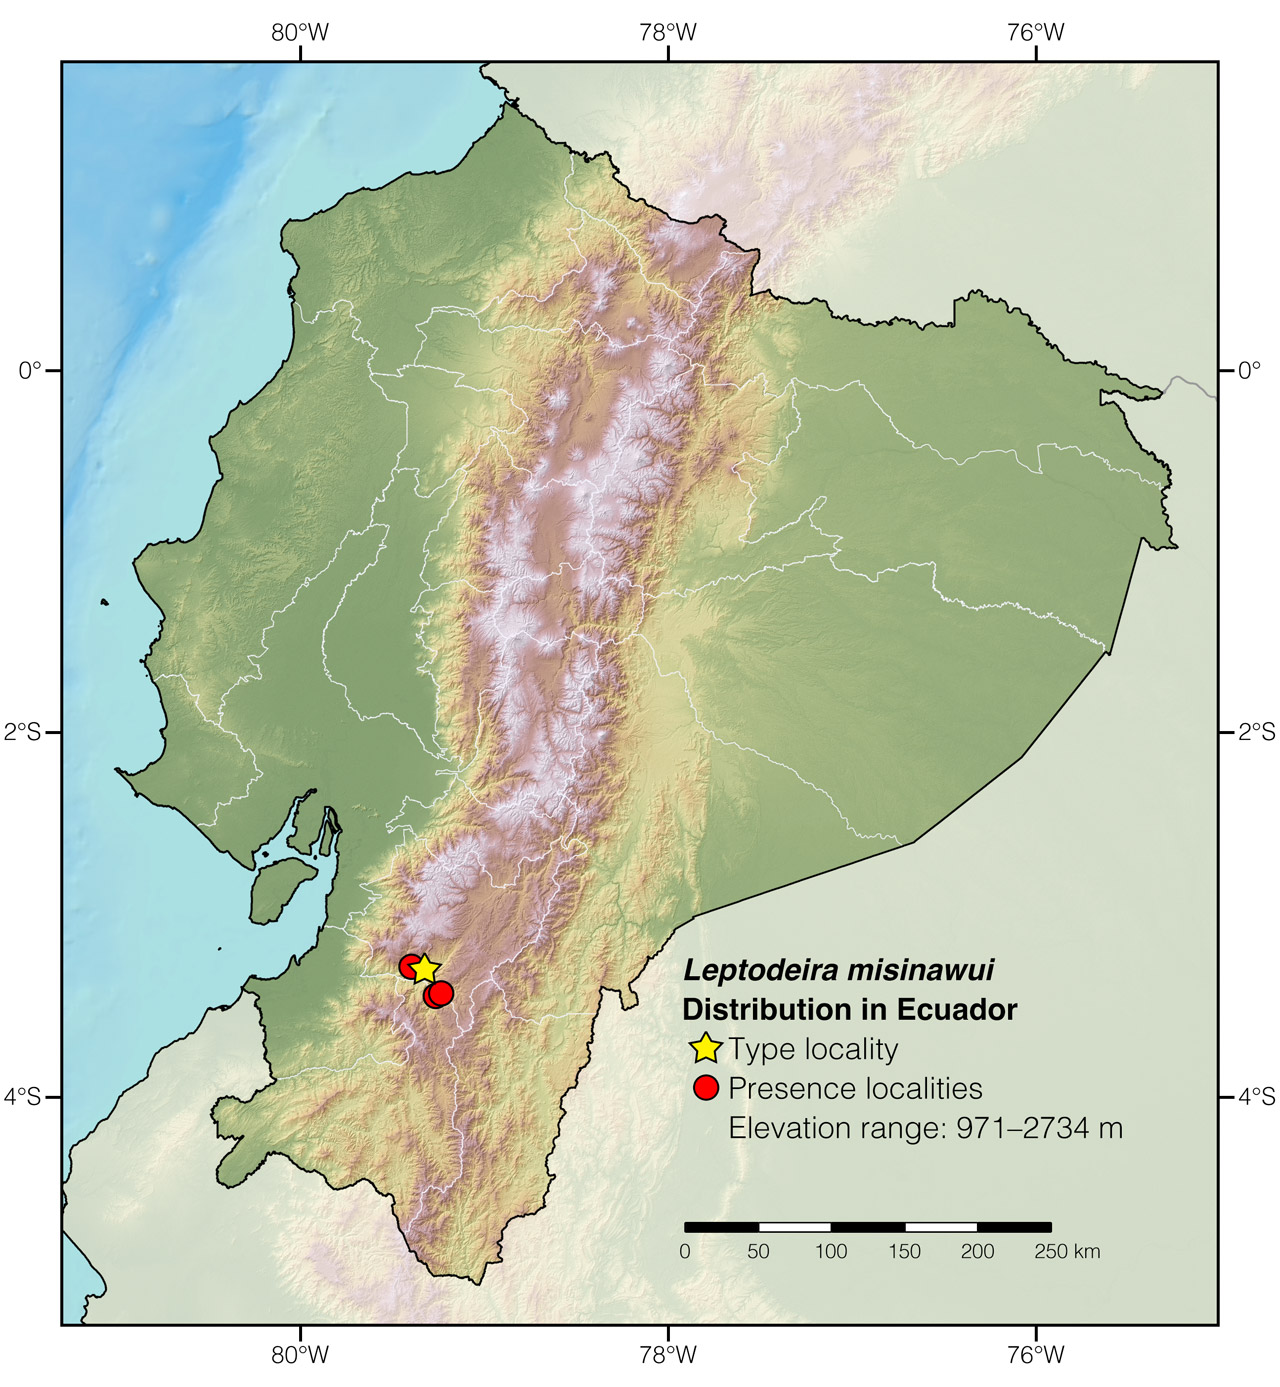 Distribution of Leptodeira misinawui in Ecuador